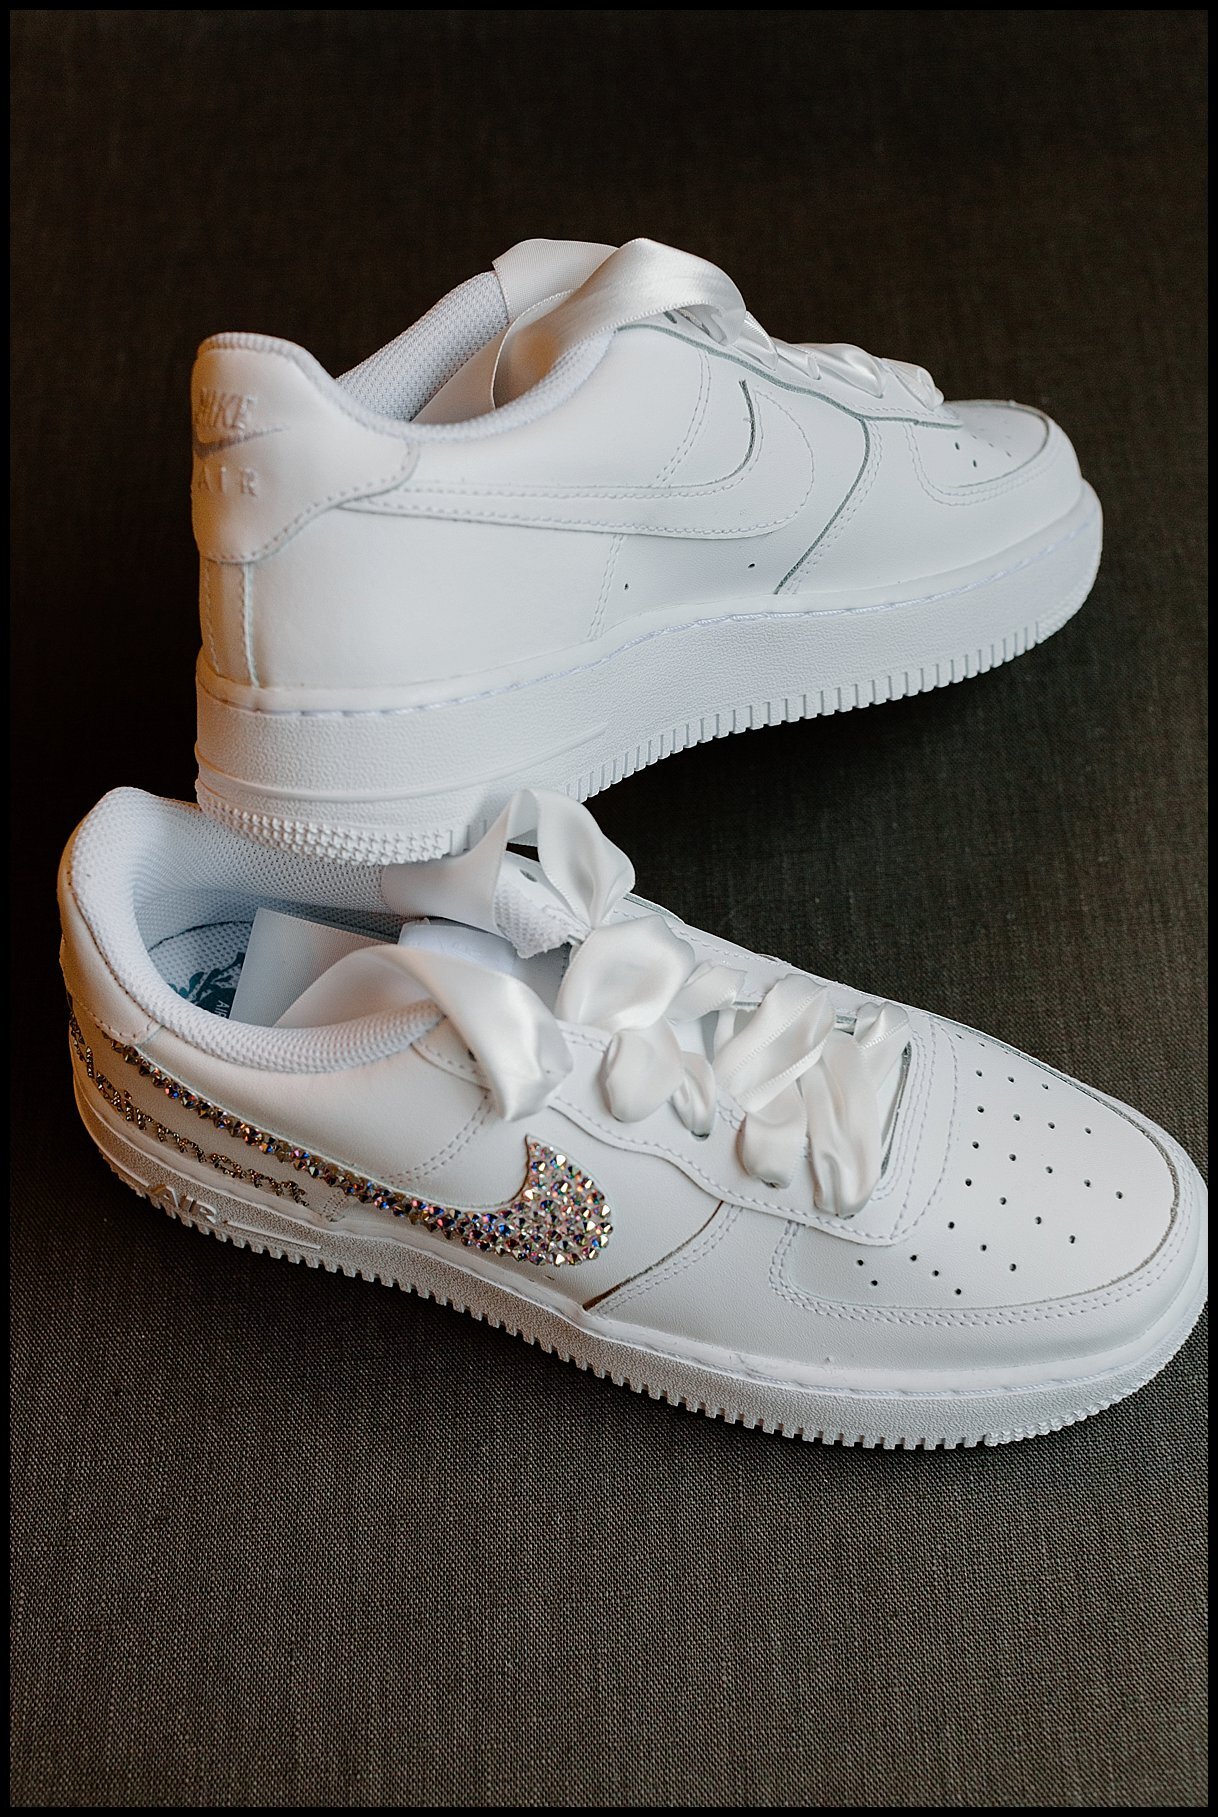  custom Nike bridal shoes.  